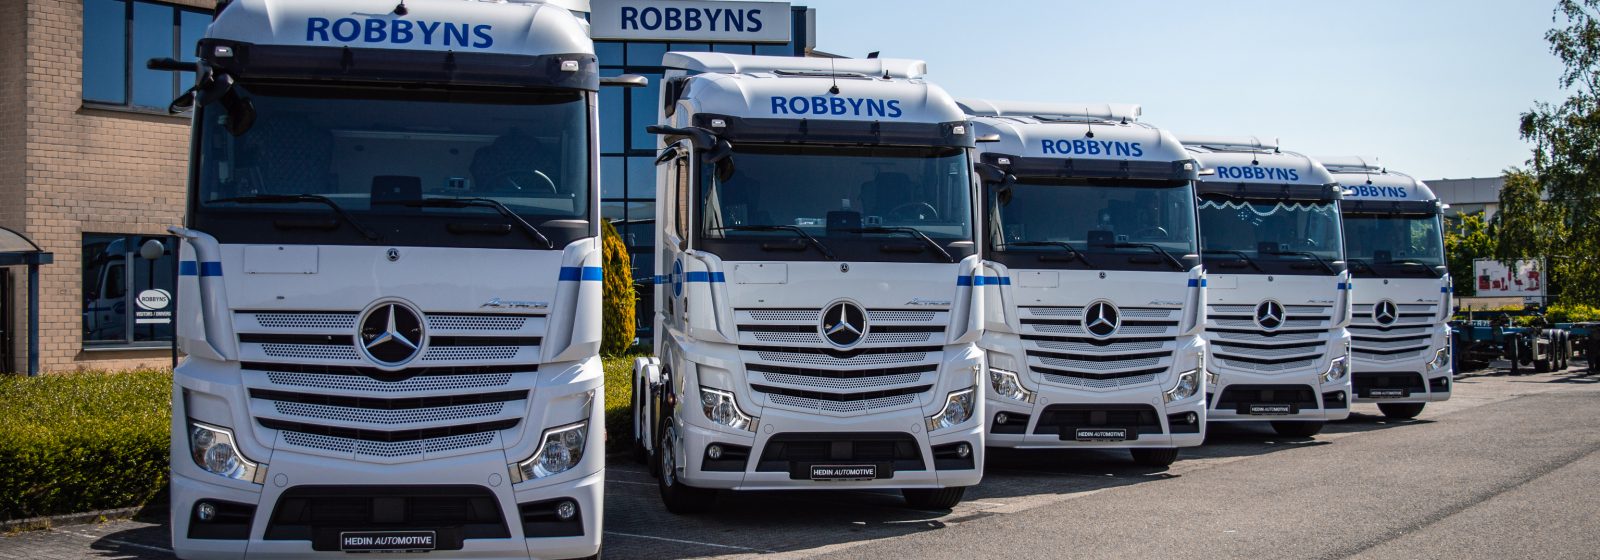 20220921 Transport Robbyns vlootuitbreiding Mercedes Trucks